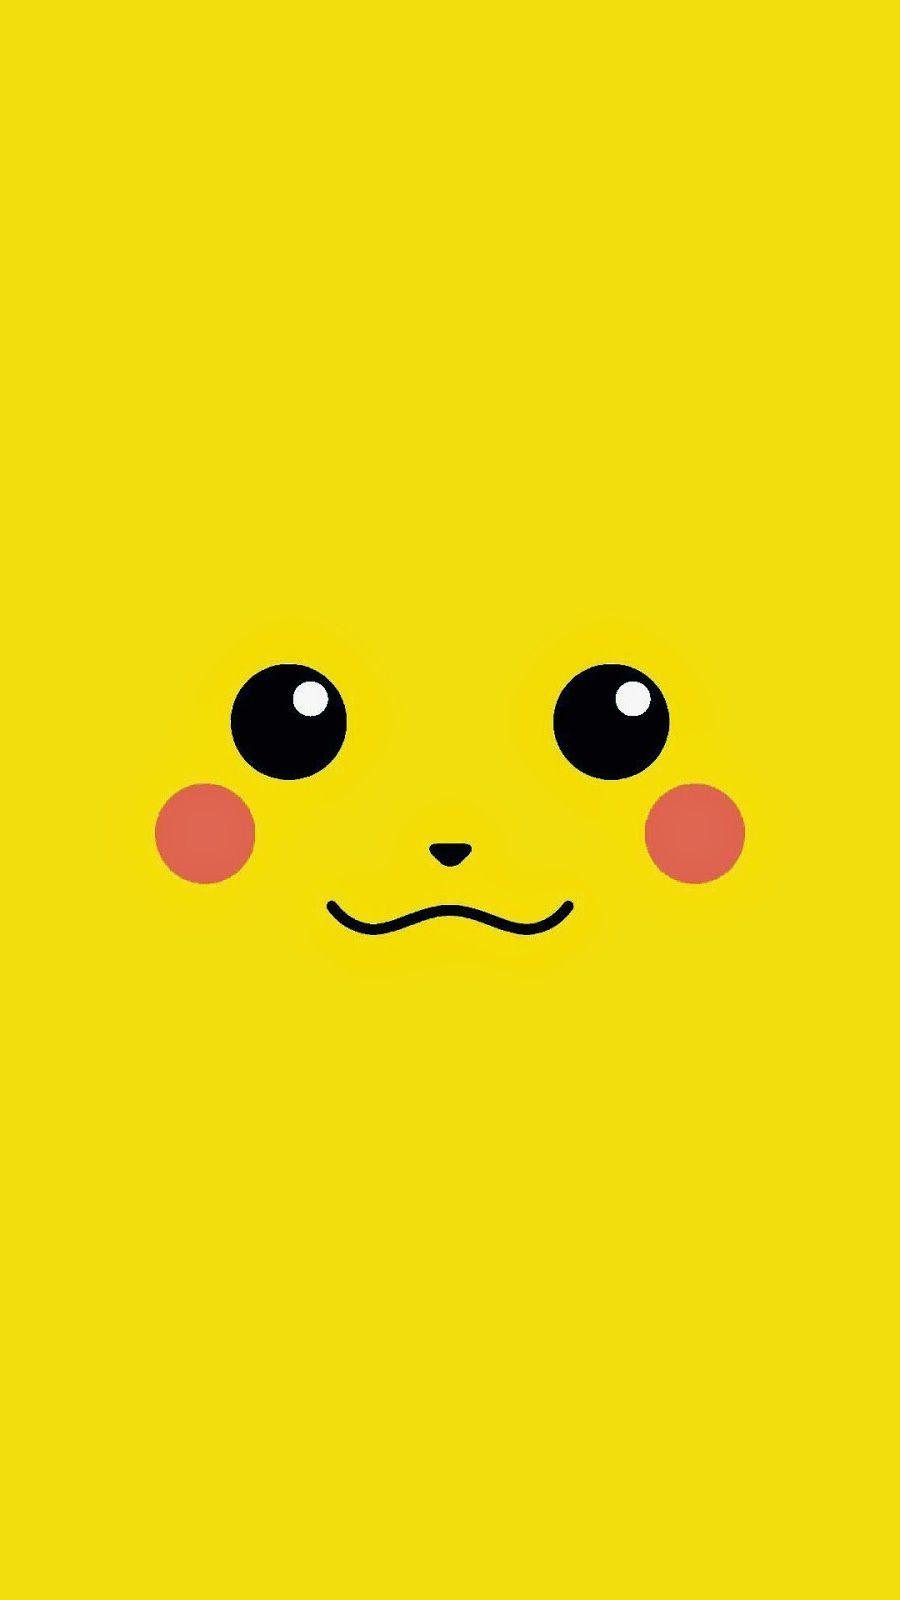 Pokemon Pikachu love girly love iphone 6 plus 1080x1920 wallpaper